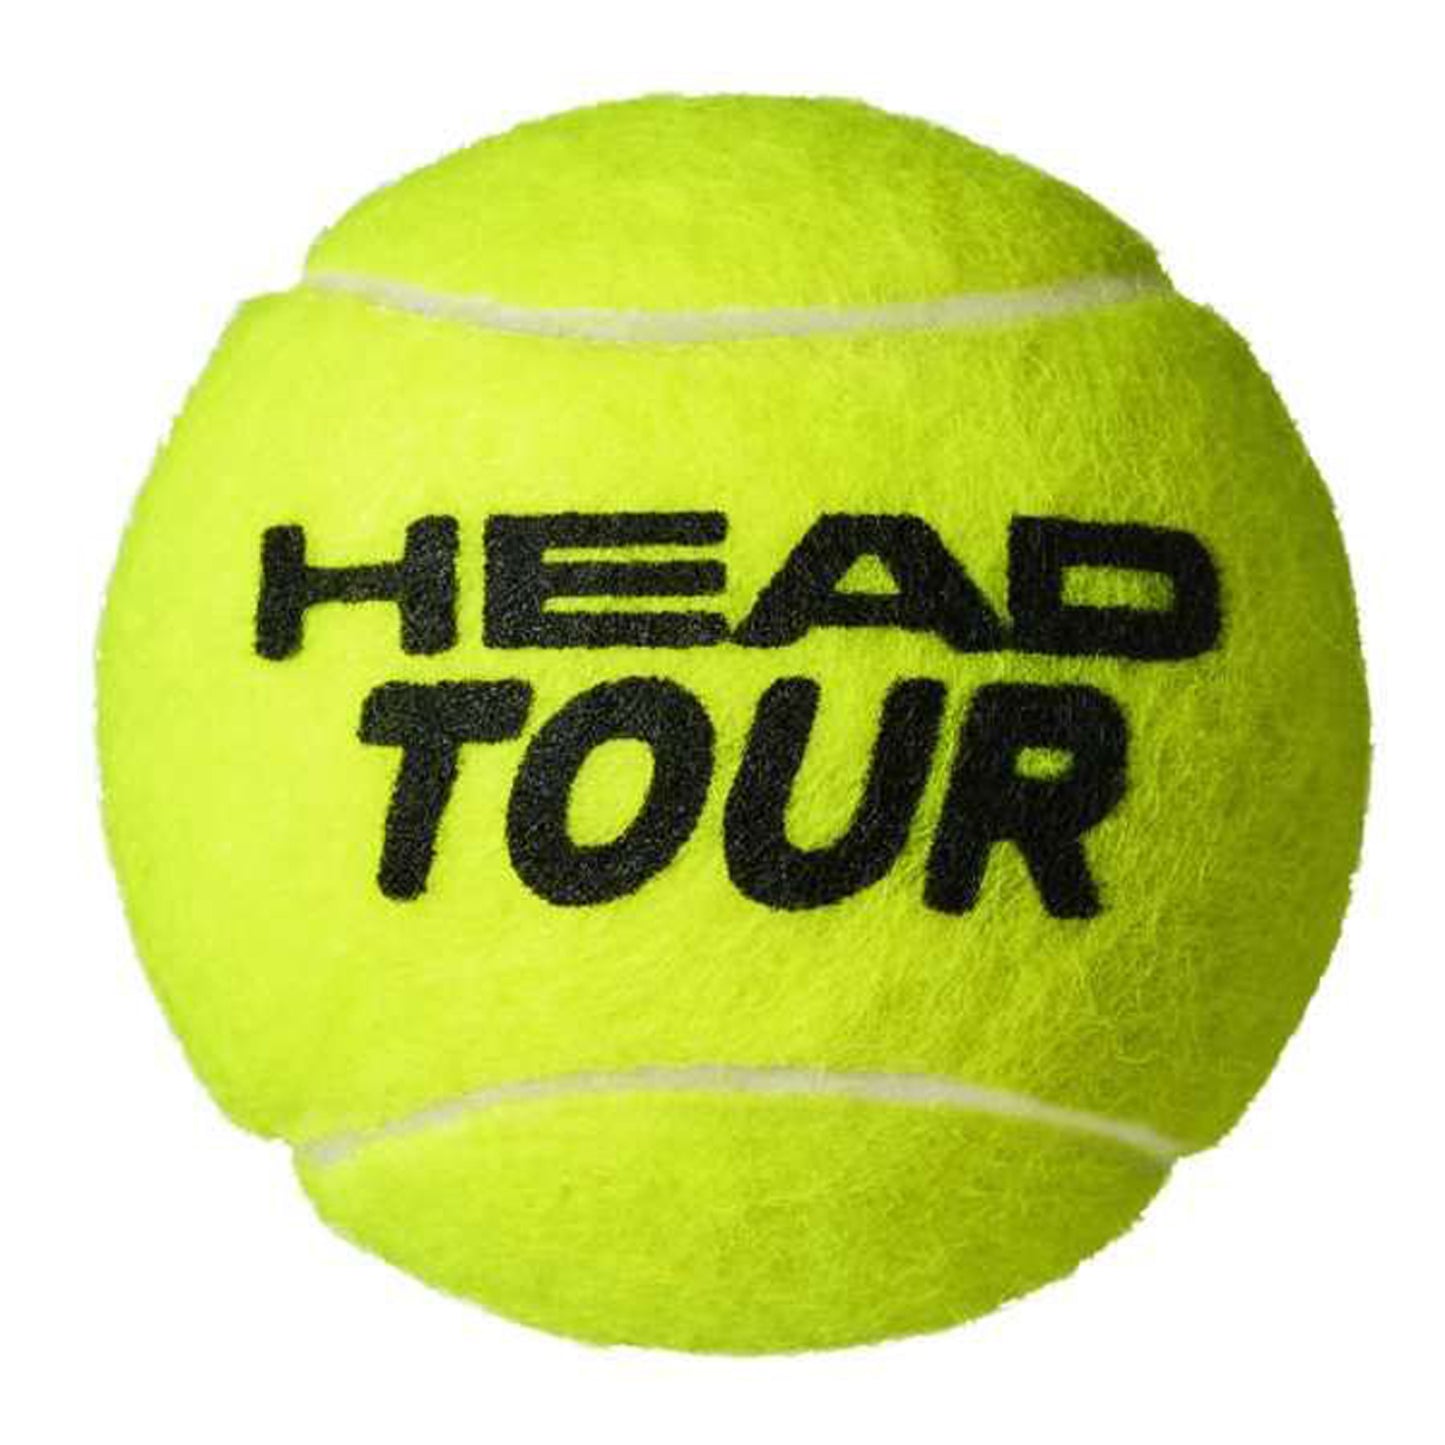 HEAD Head Tour High Altitud Tennis Ball - Best Price online Prokicksports.com